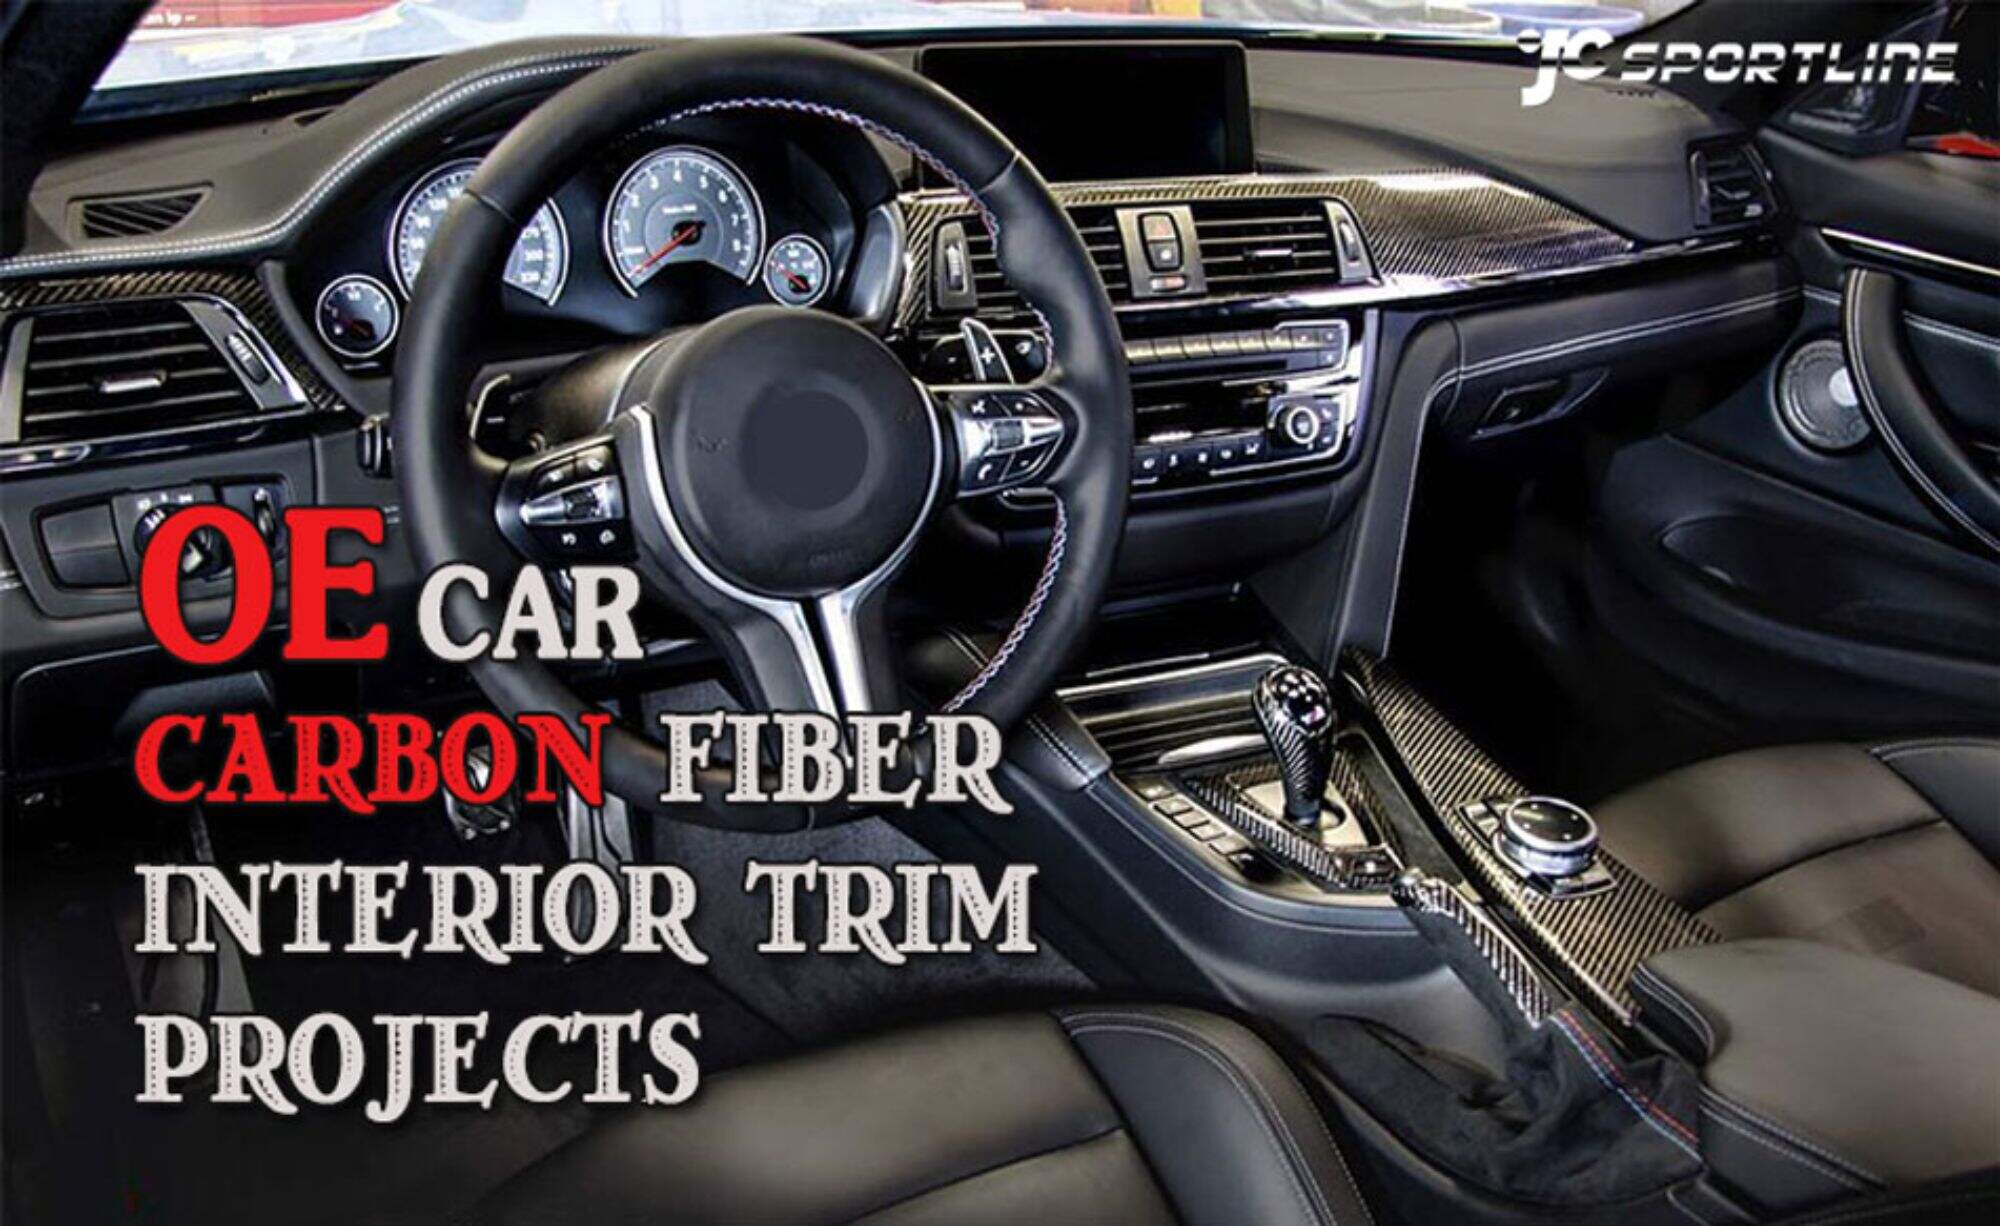 OE CAR Interior Trim Projects